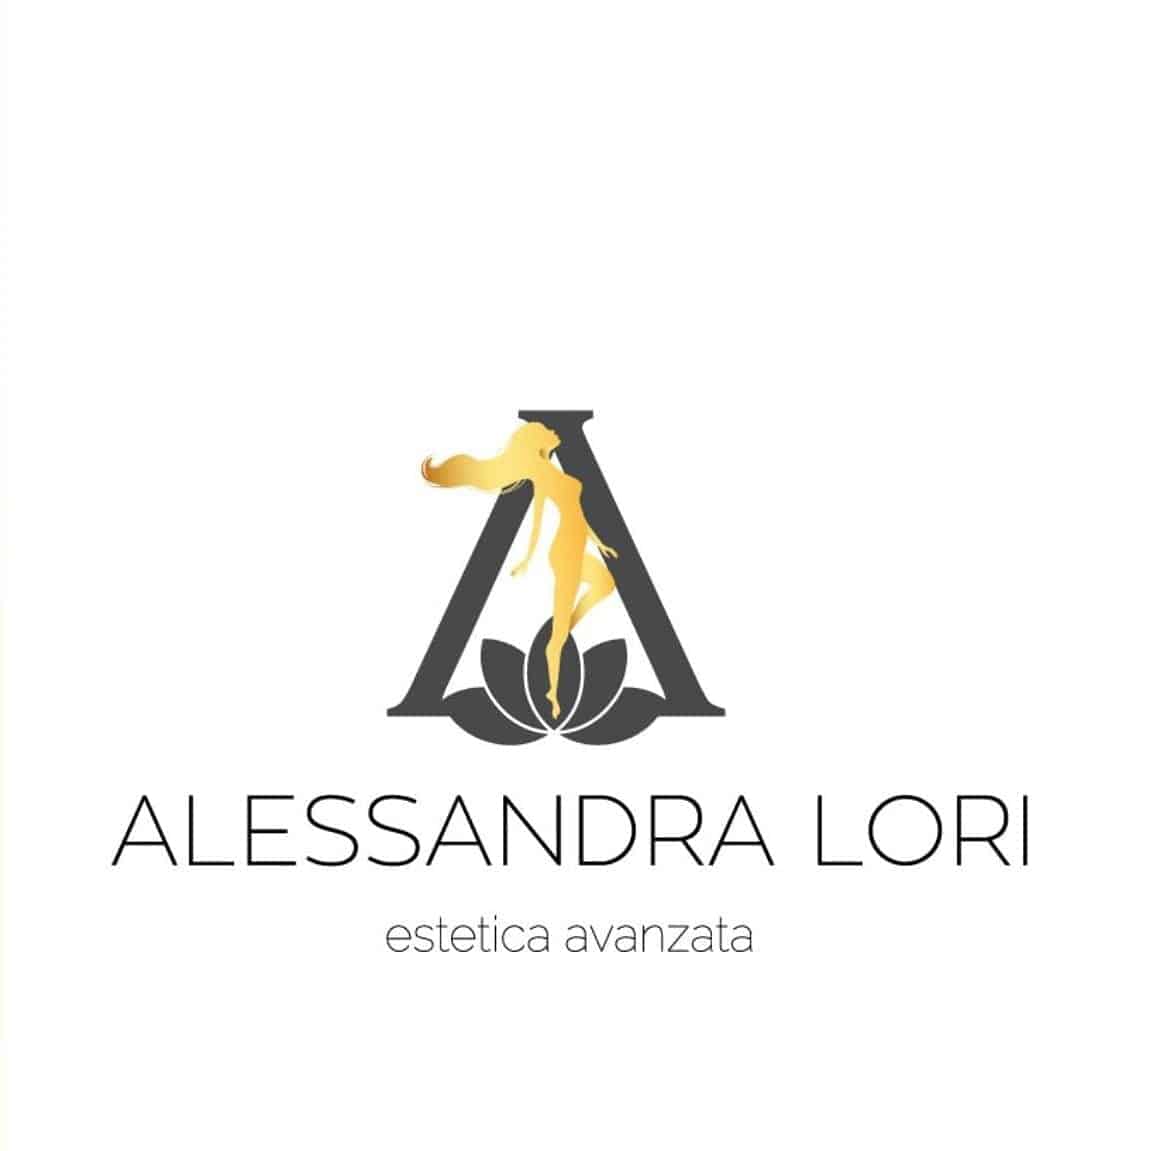 Alessandra Lori